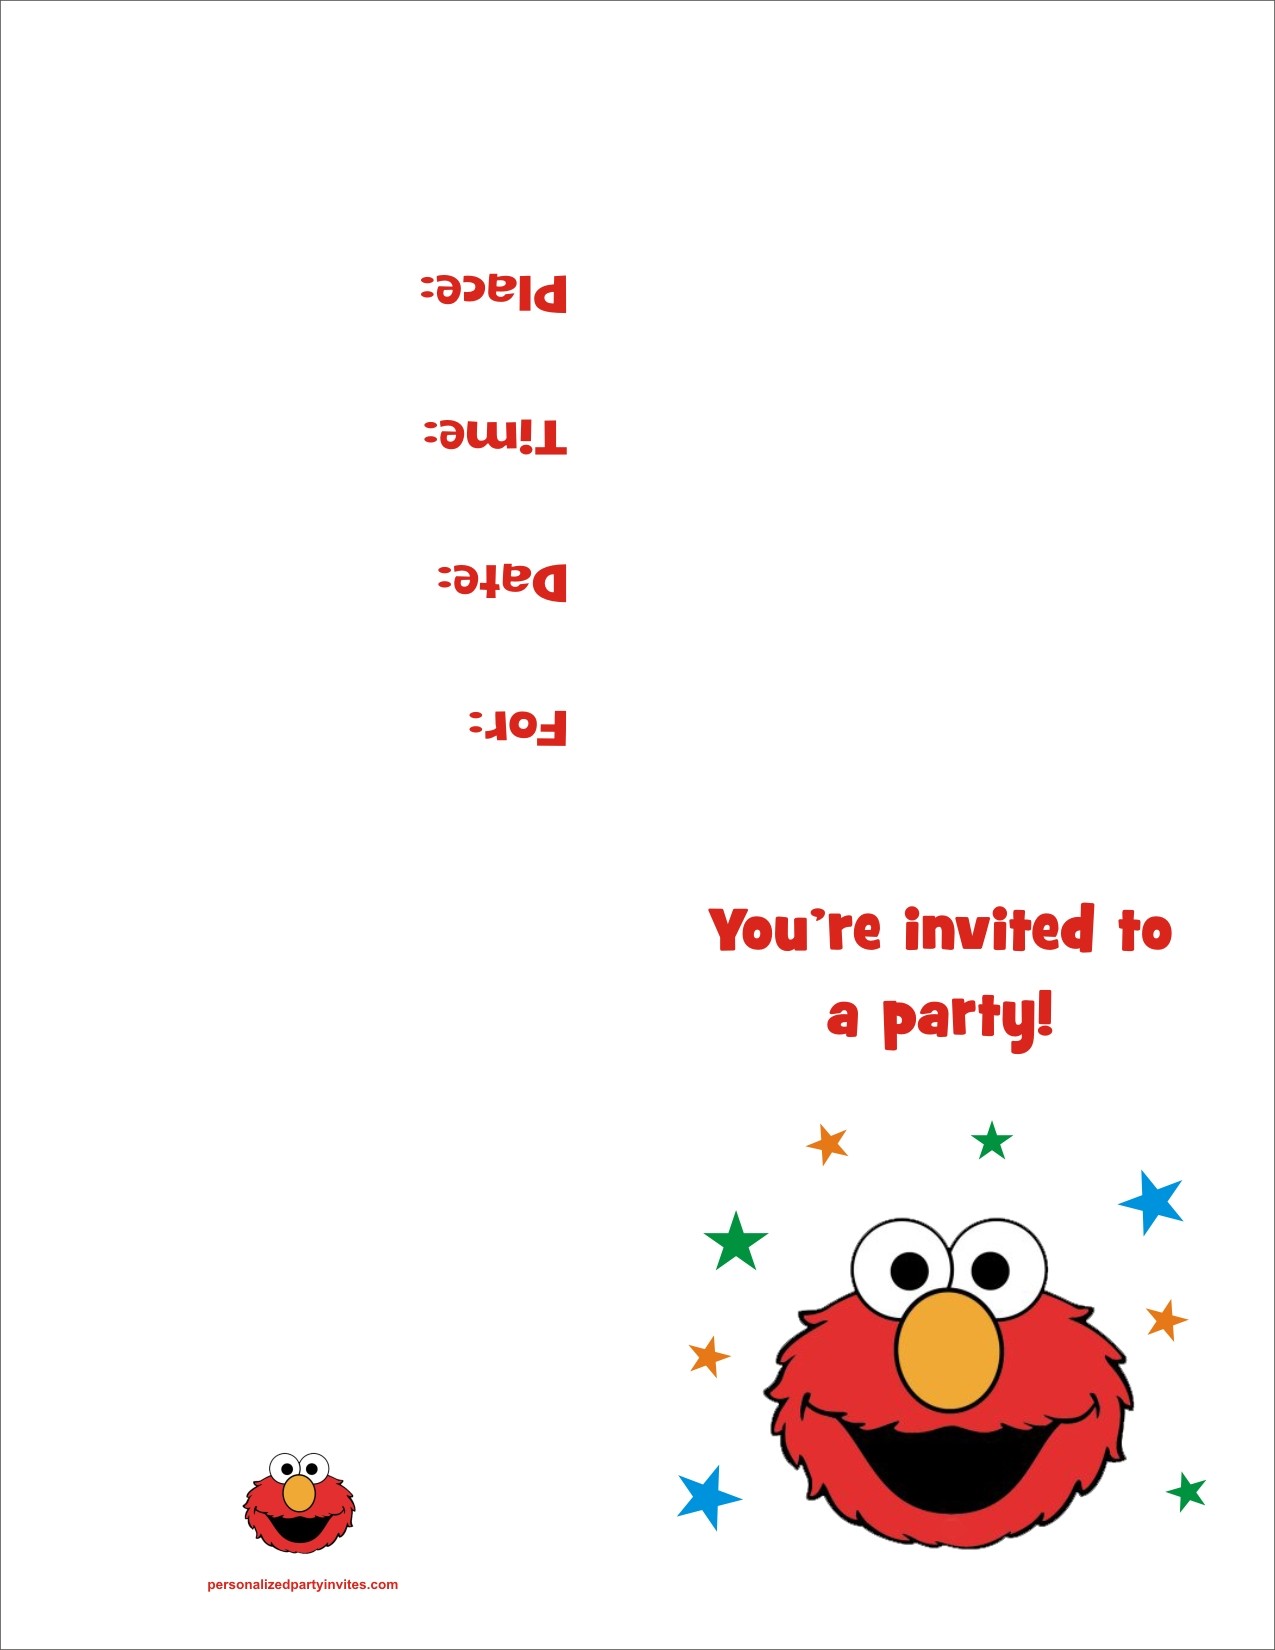 elmo-free-printable-birthday-party-invitation-personalized-party-invites